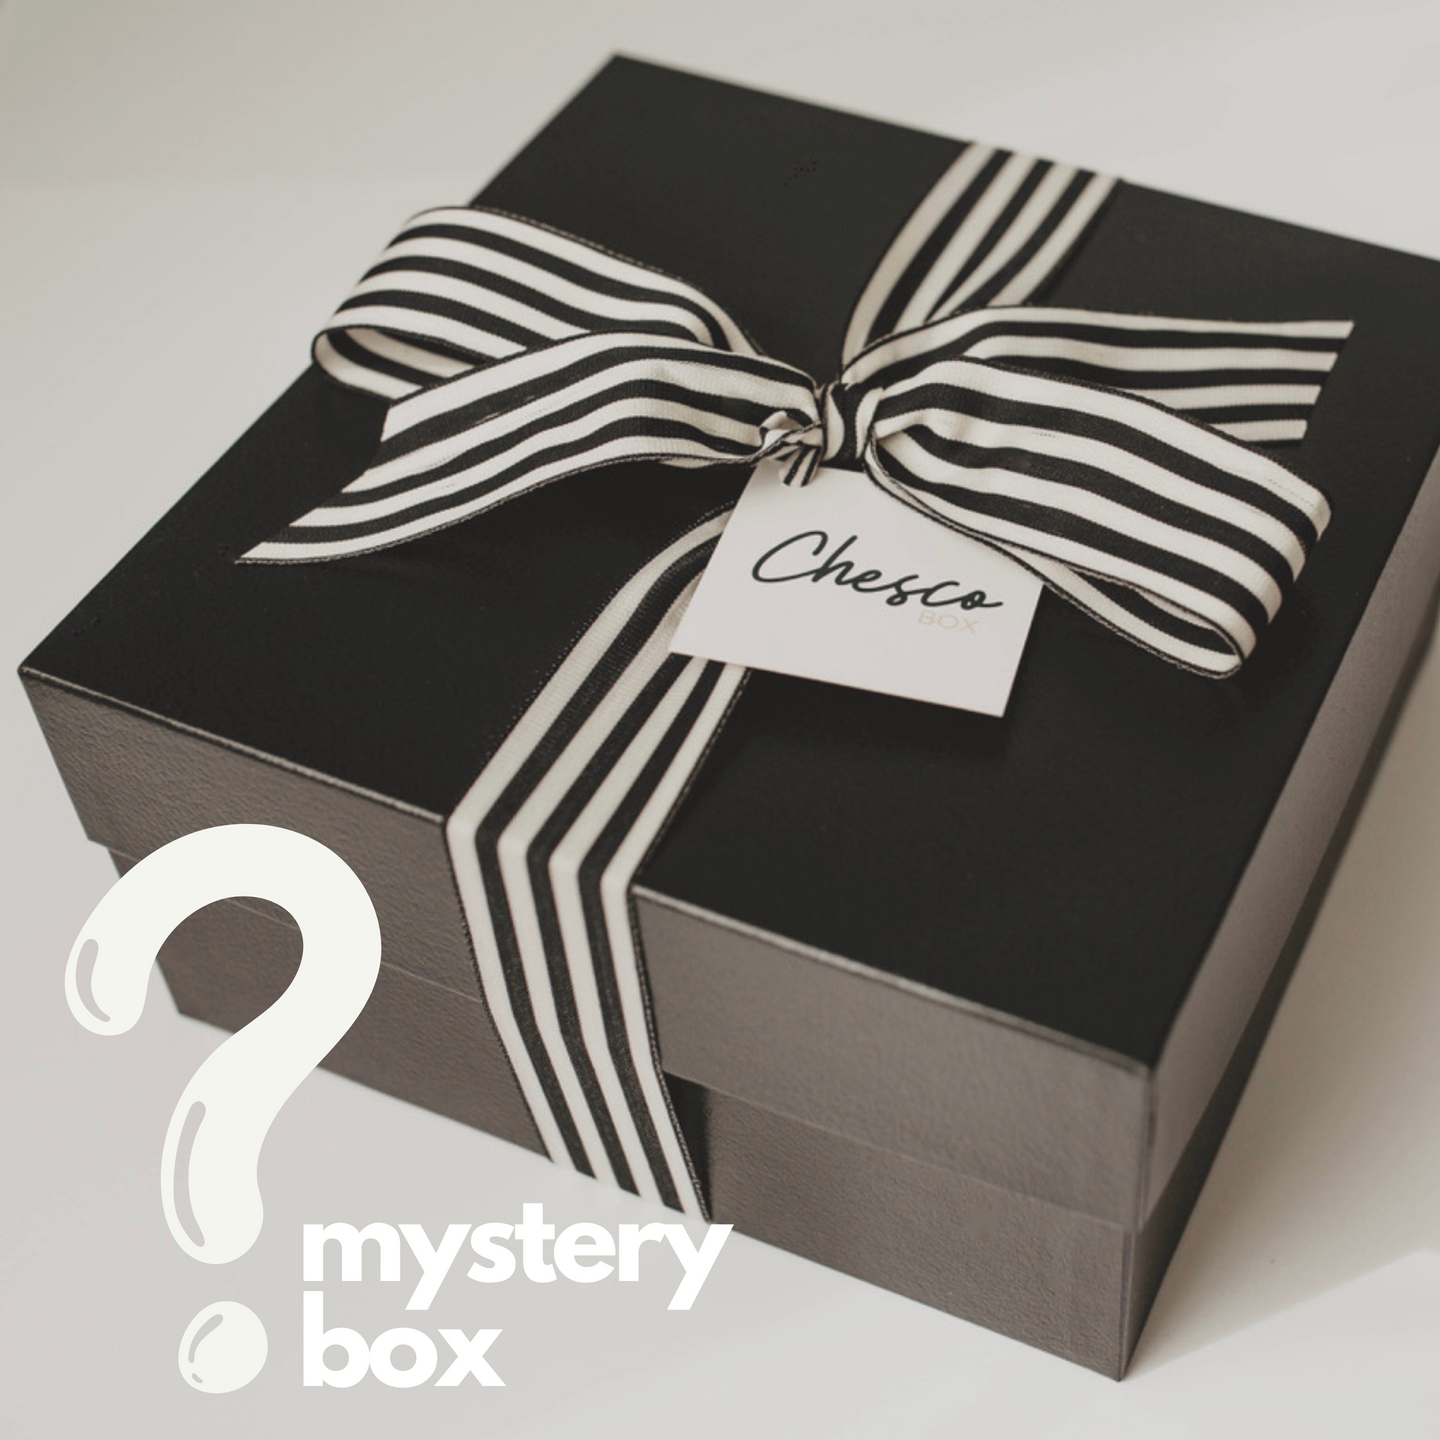 Mystery Gift Box – Chesco Box